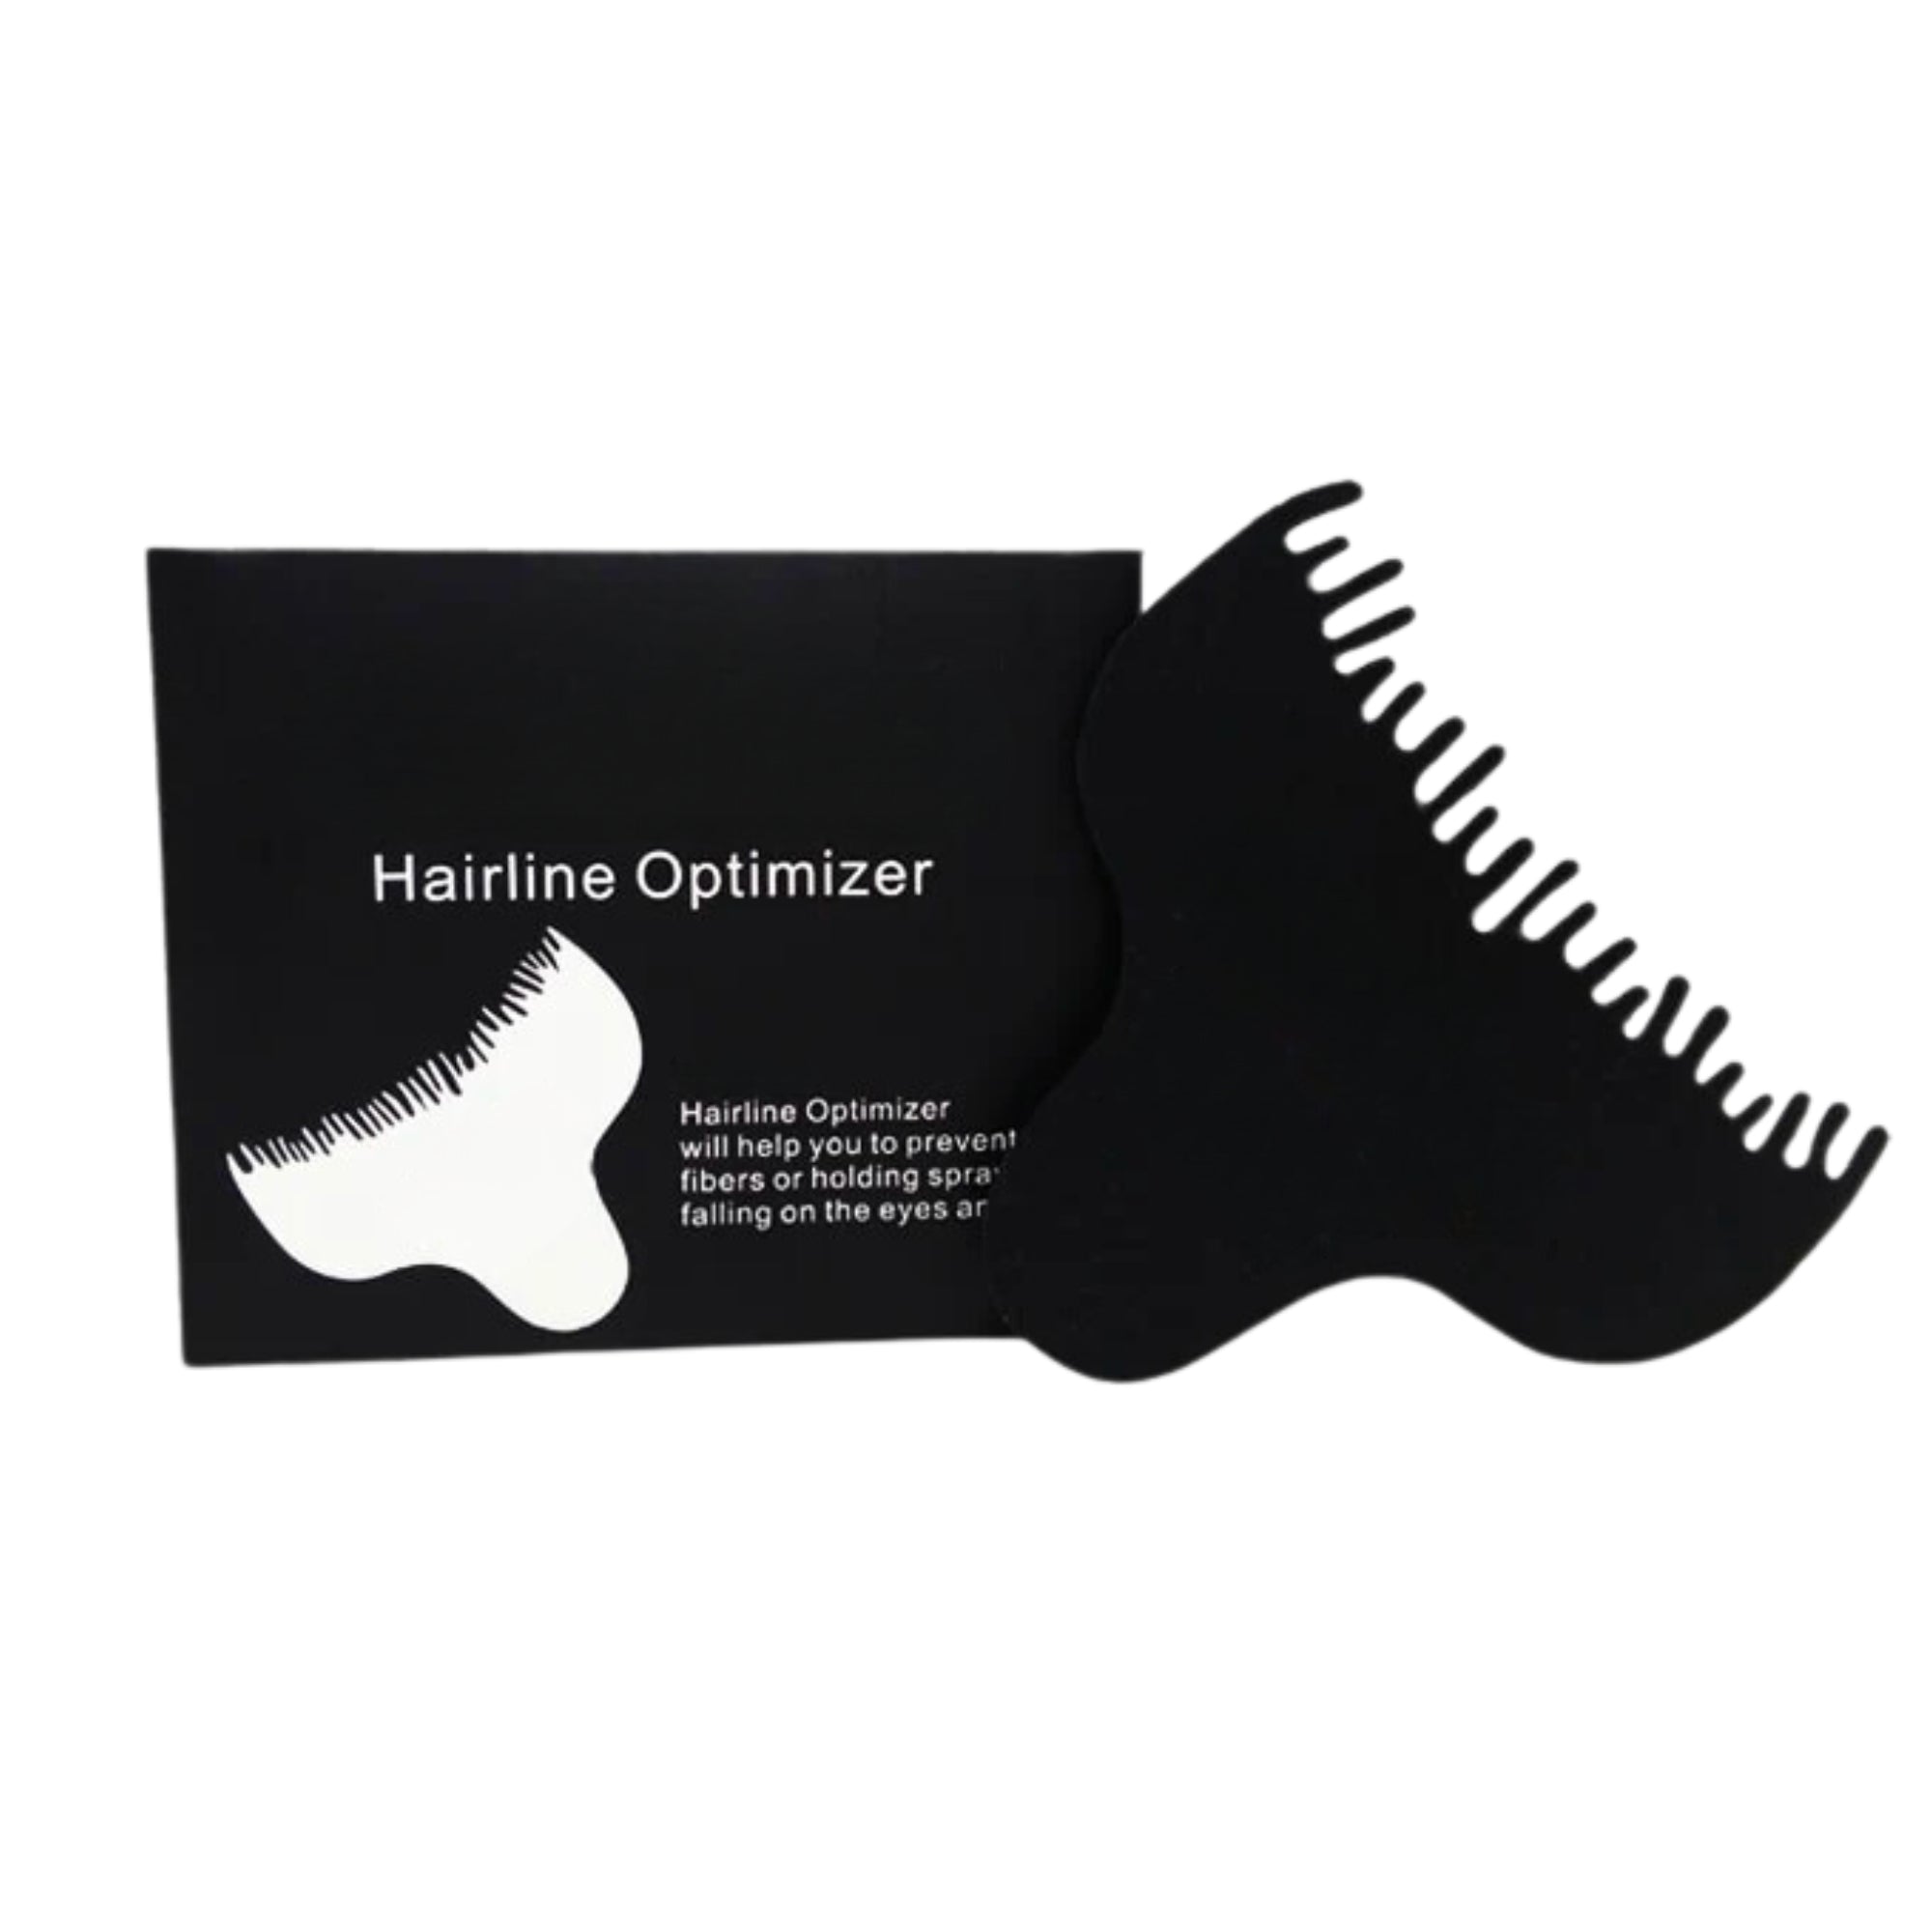 Hairline Optimizer